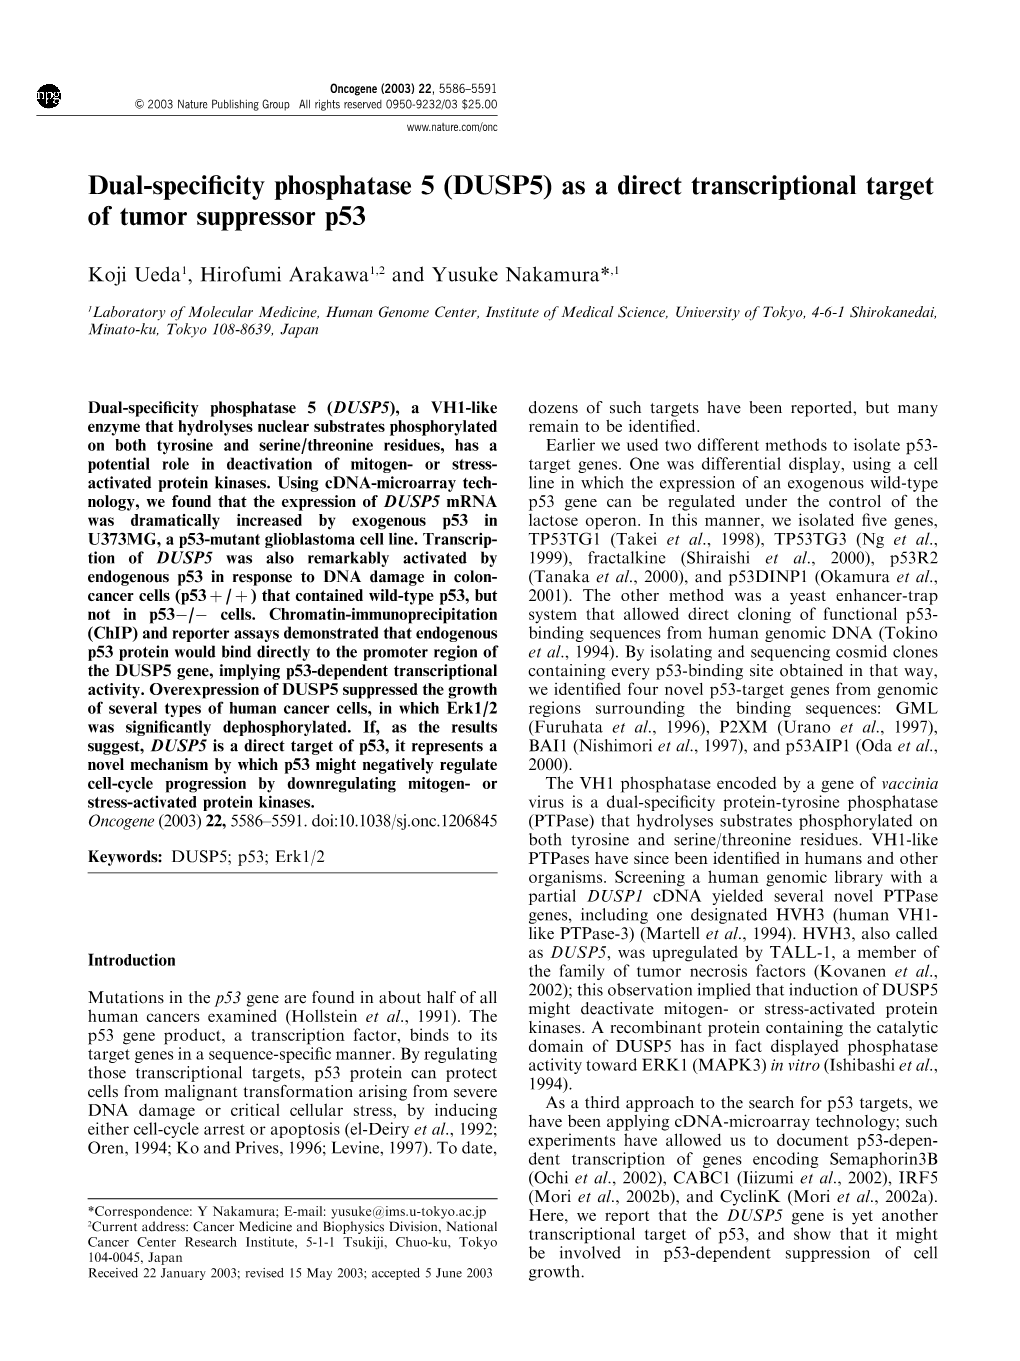 Dual-Specificity Phosphatase 5 (DUSP5) As a Direct Transcriptional